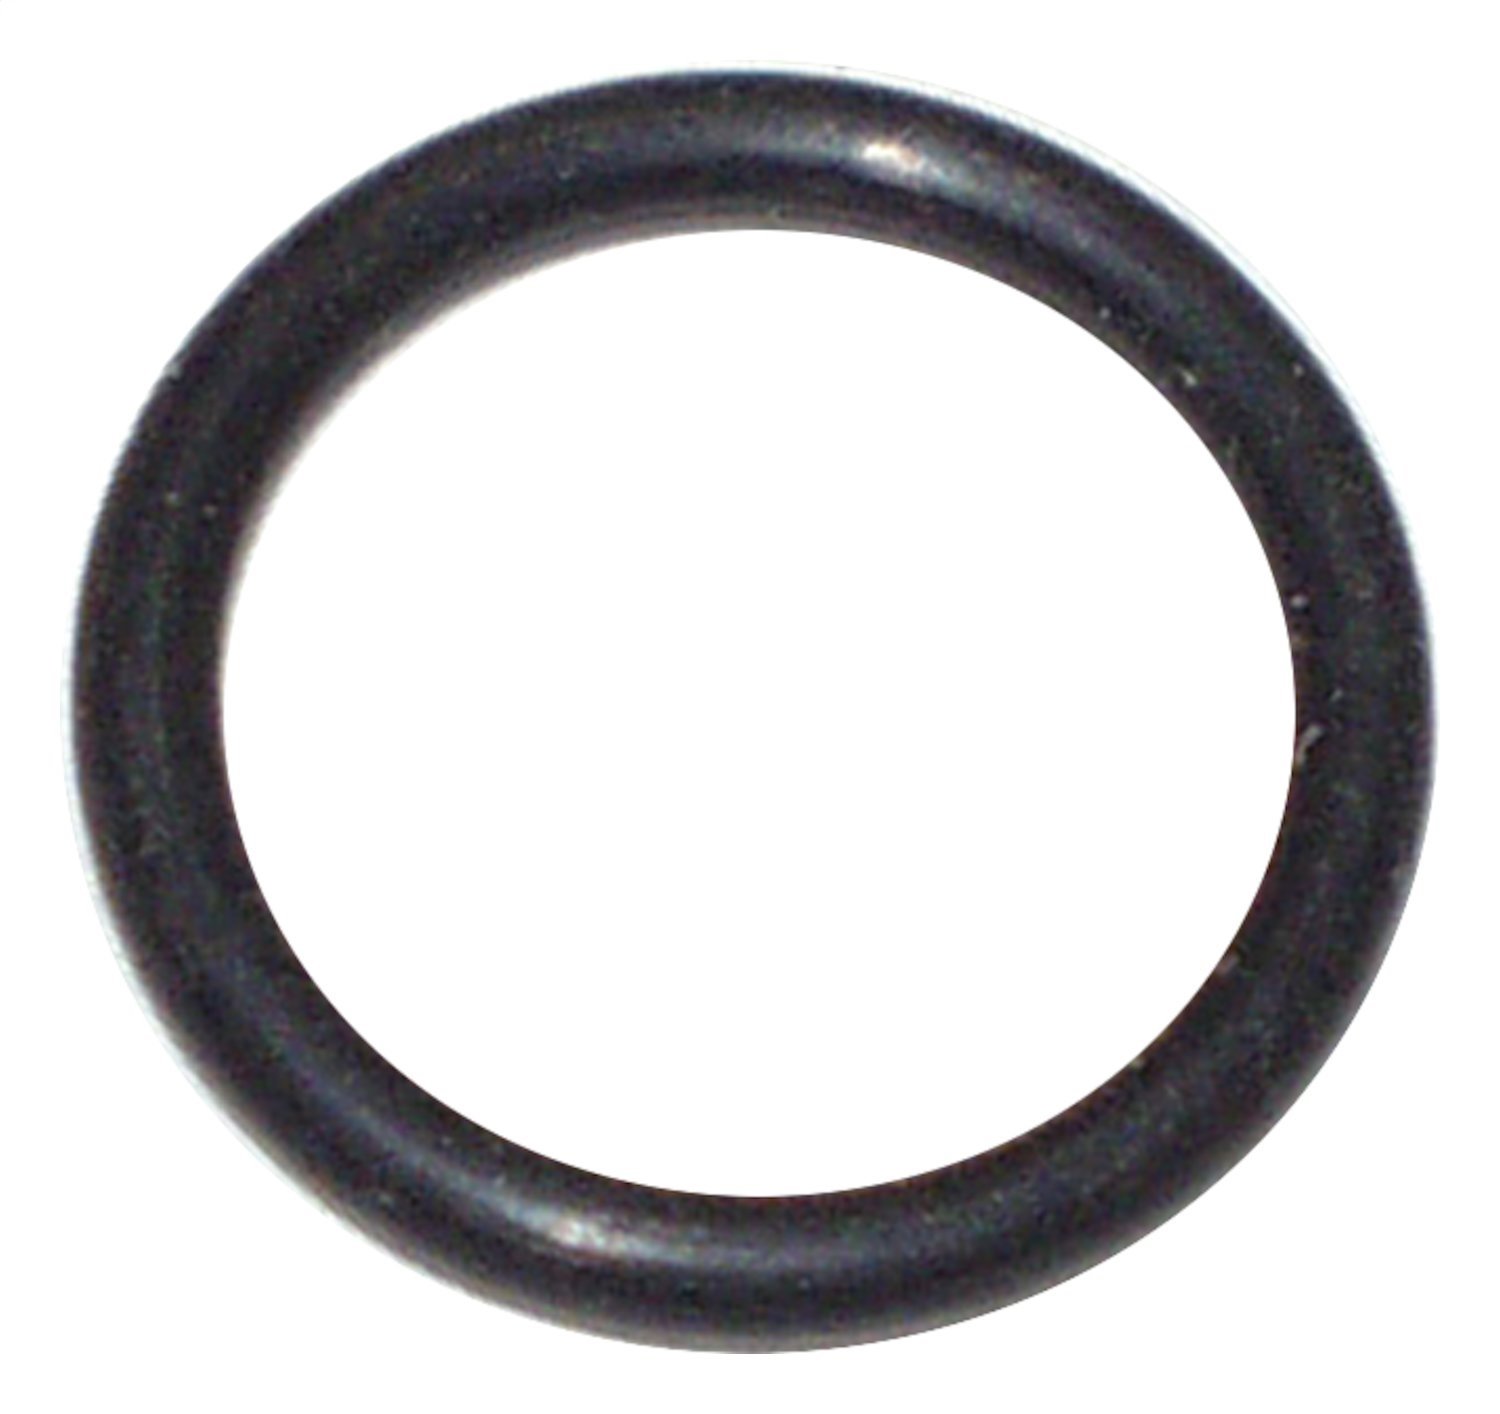 Crankcase Vent O-Ring